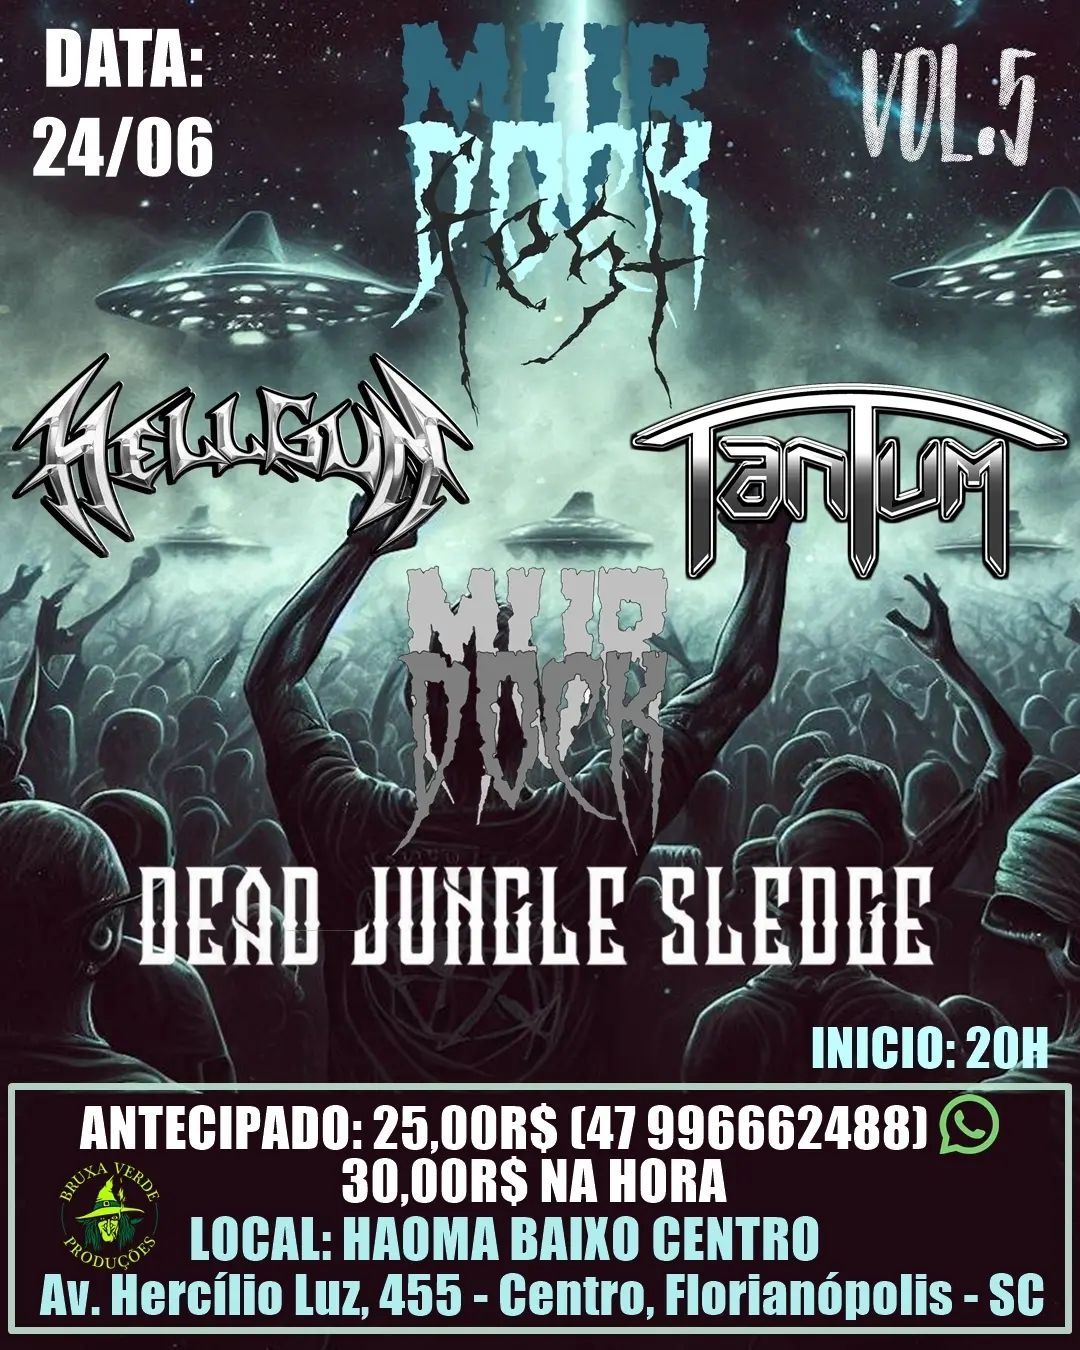 Murdock Fest Vol. 5 com as bandas Murdock (SC), Dead Jungle Sledge (SC), Tantum (MG) e Hell Gun (PR) em Florianópolis-SC